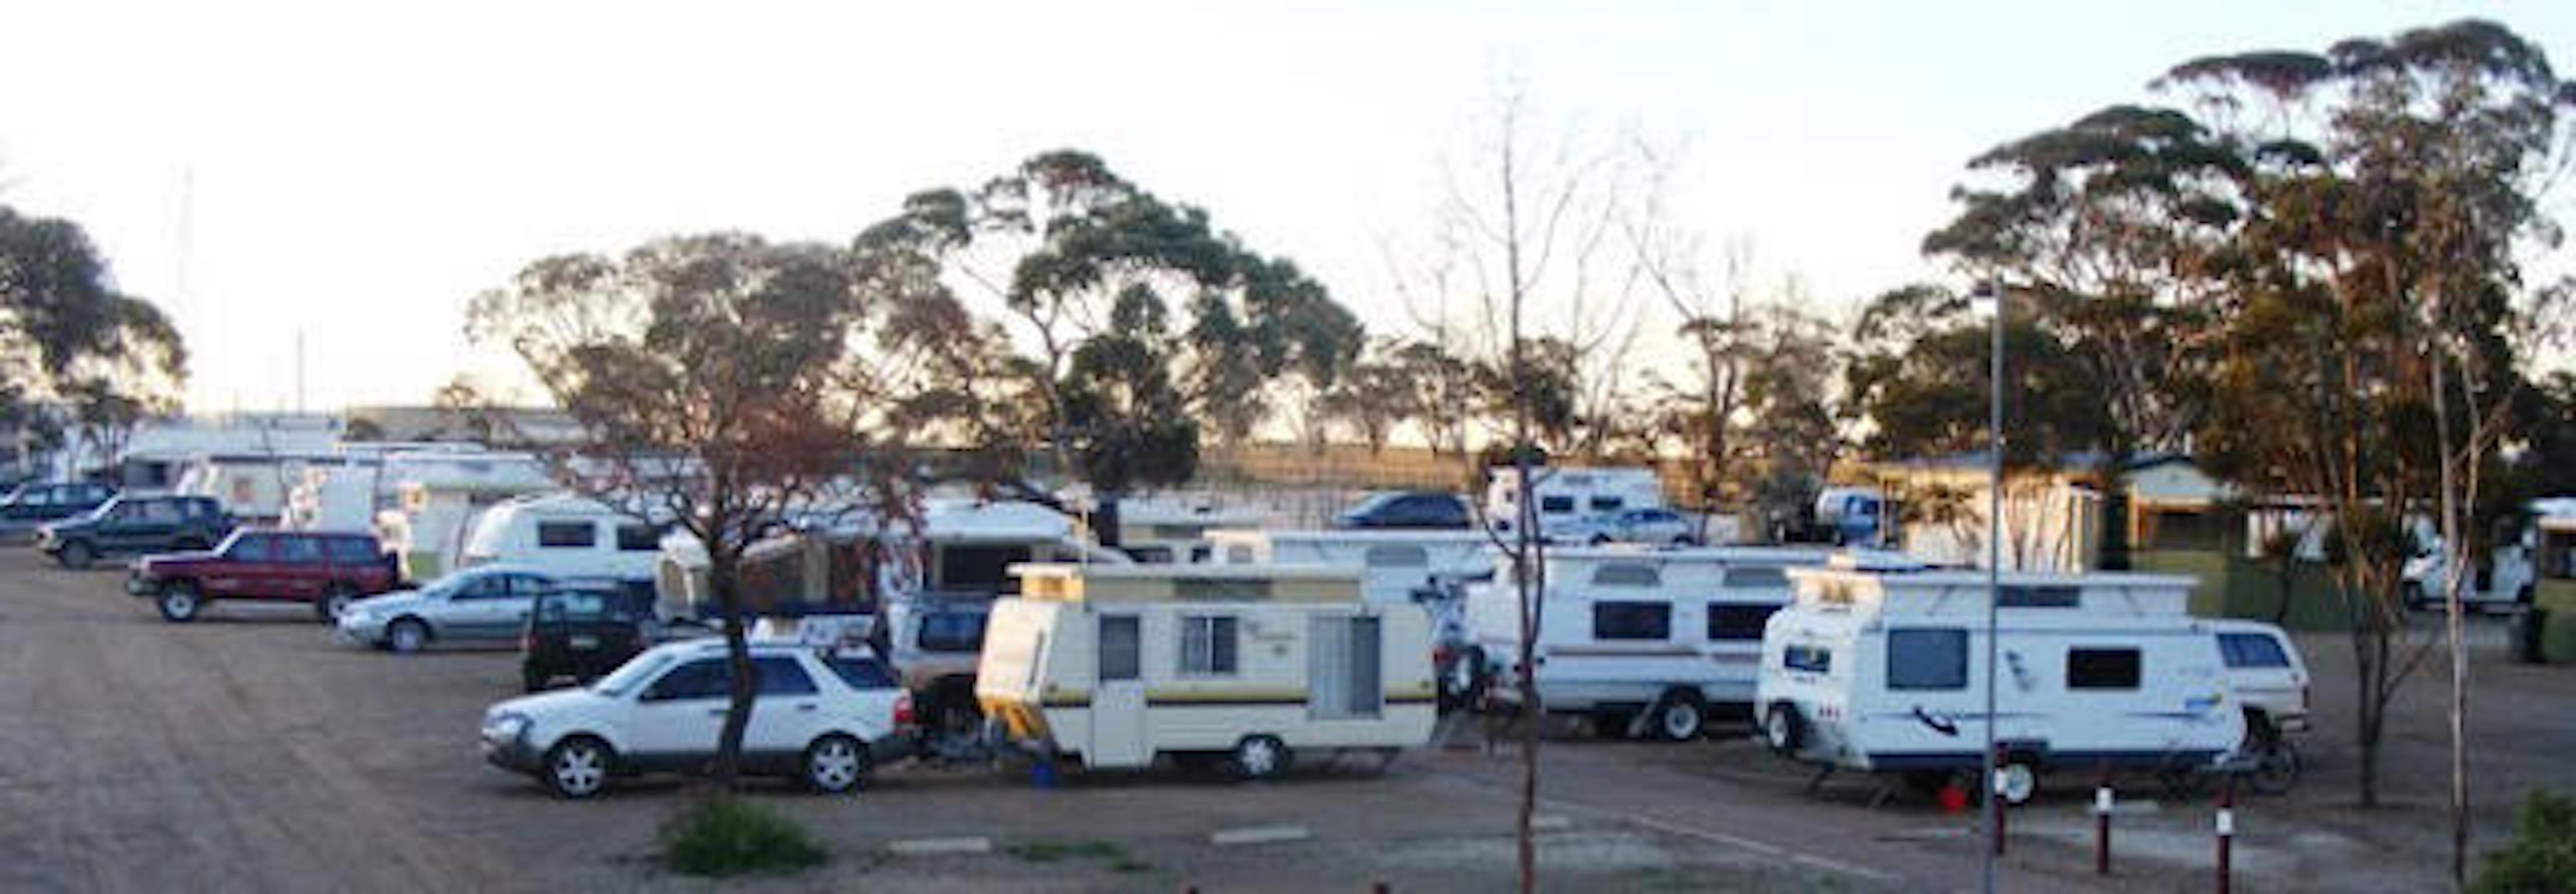 Woomera Traveller's Village and Caravan Park - Accommodation Sydney